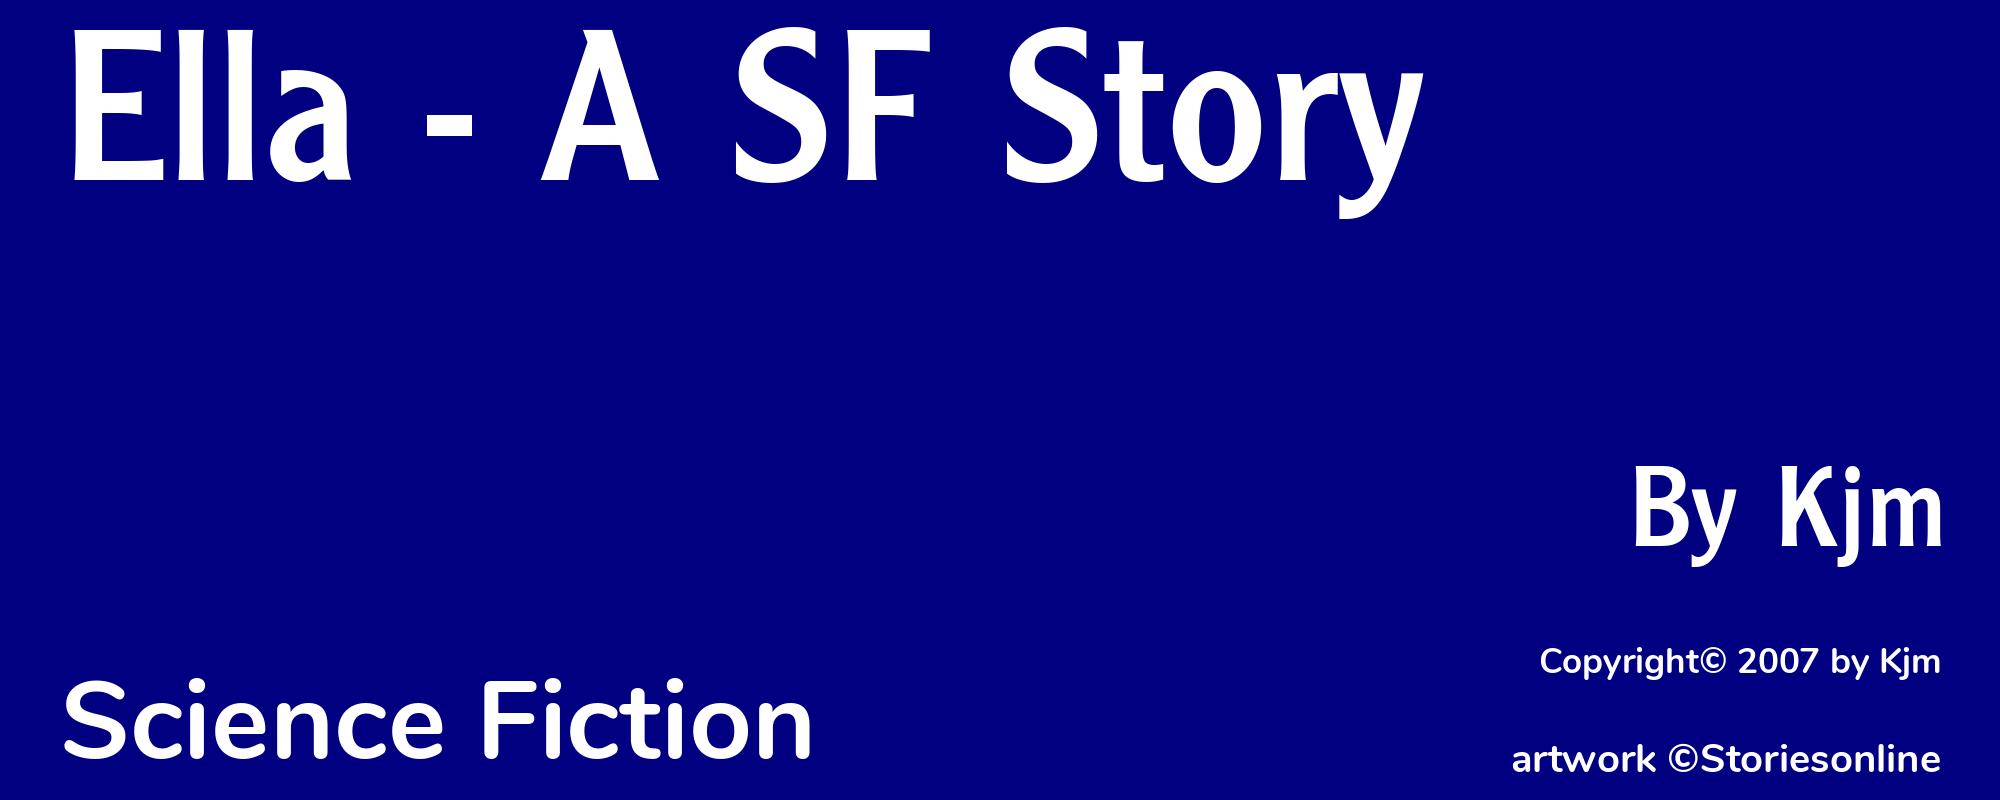 Ella - A SF Story - Cover